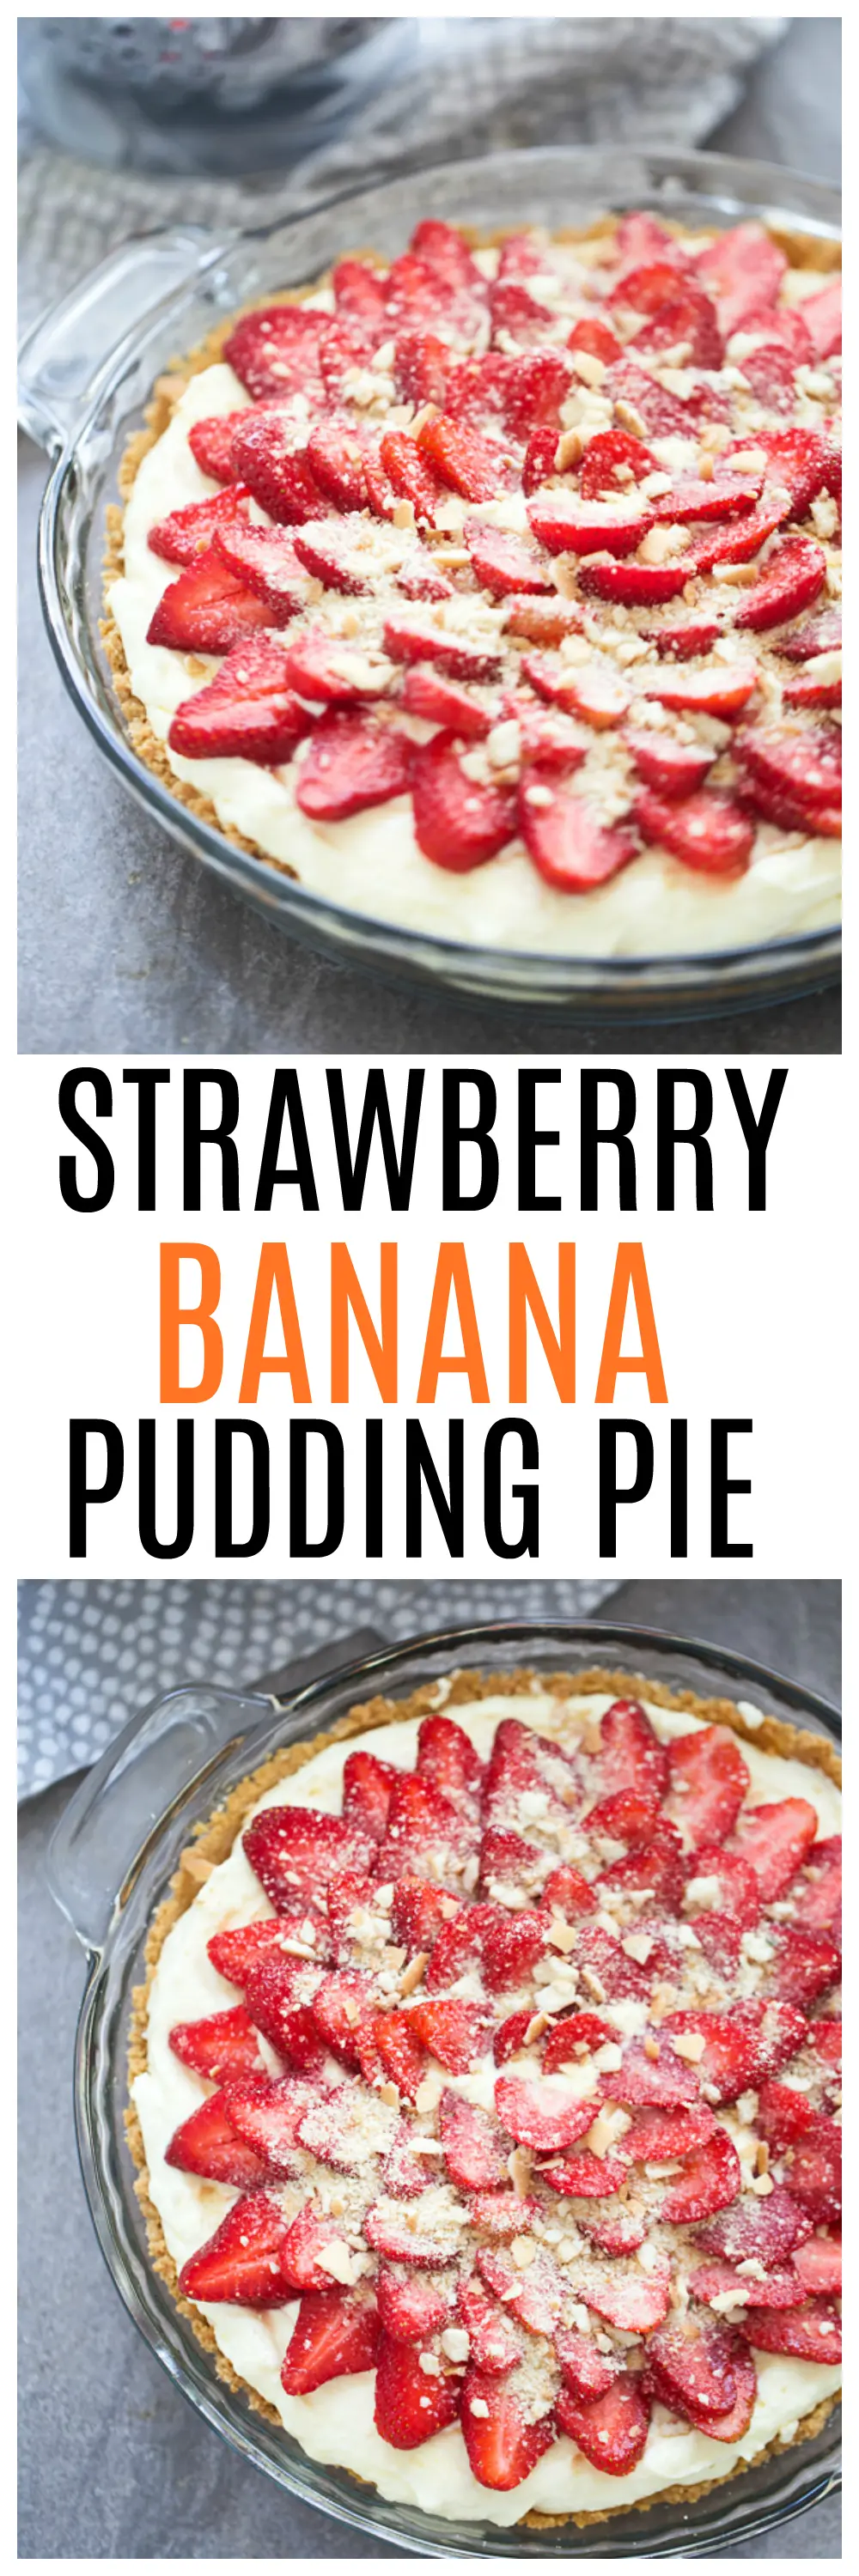 Strawberry Banana Pudding Pie